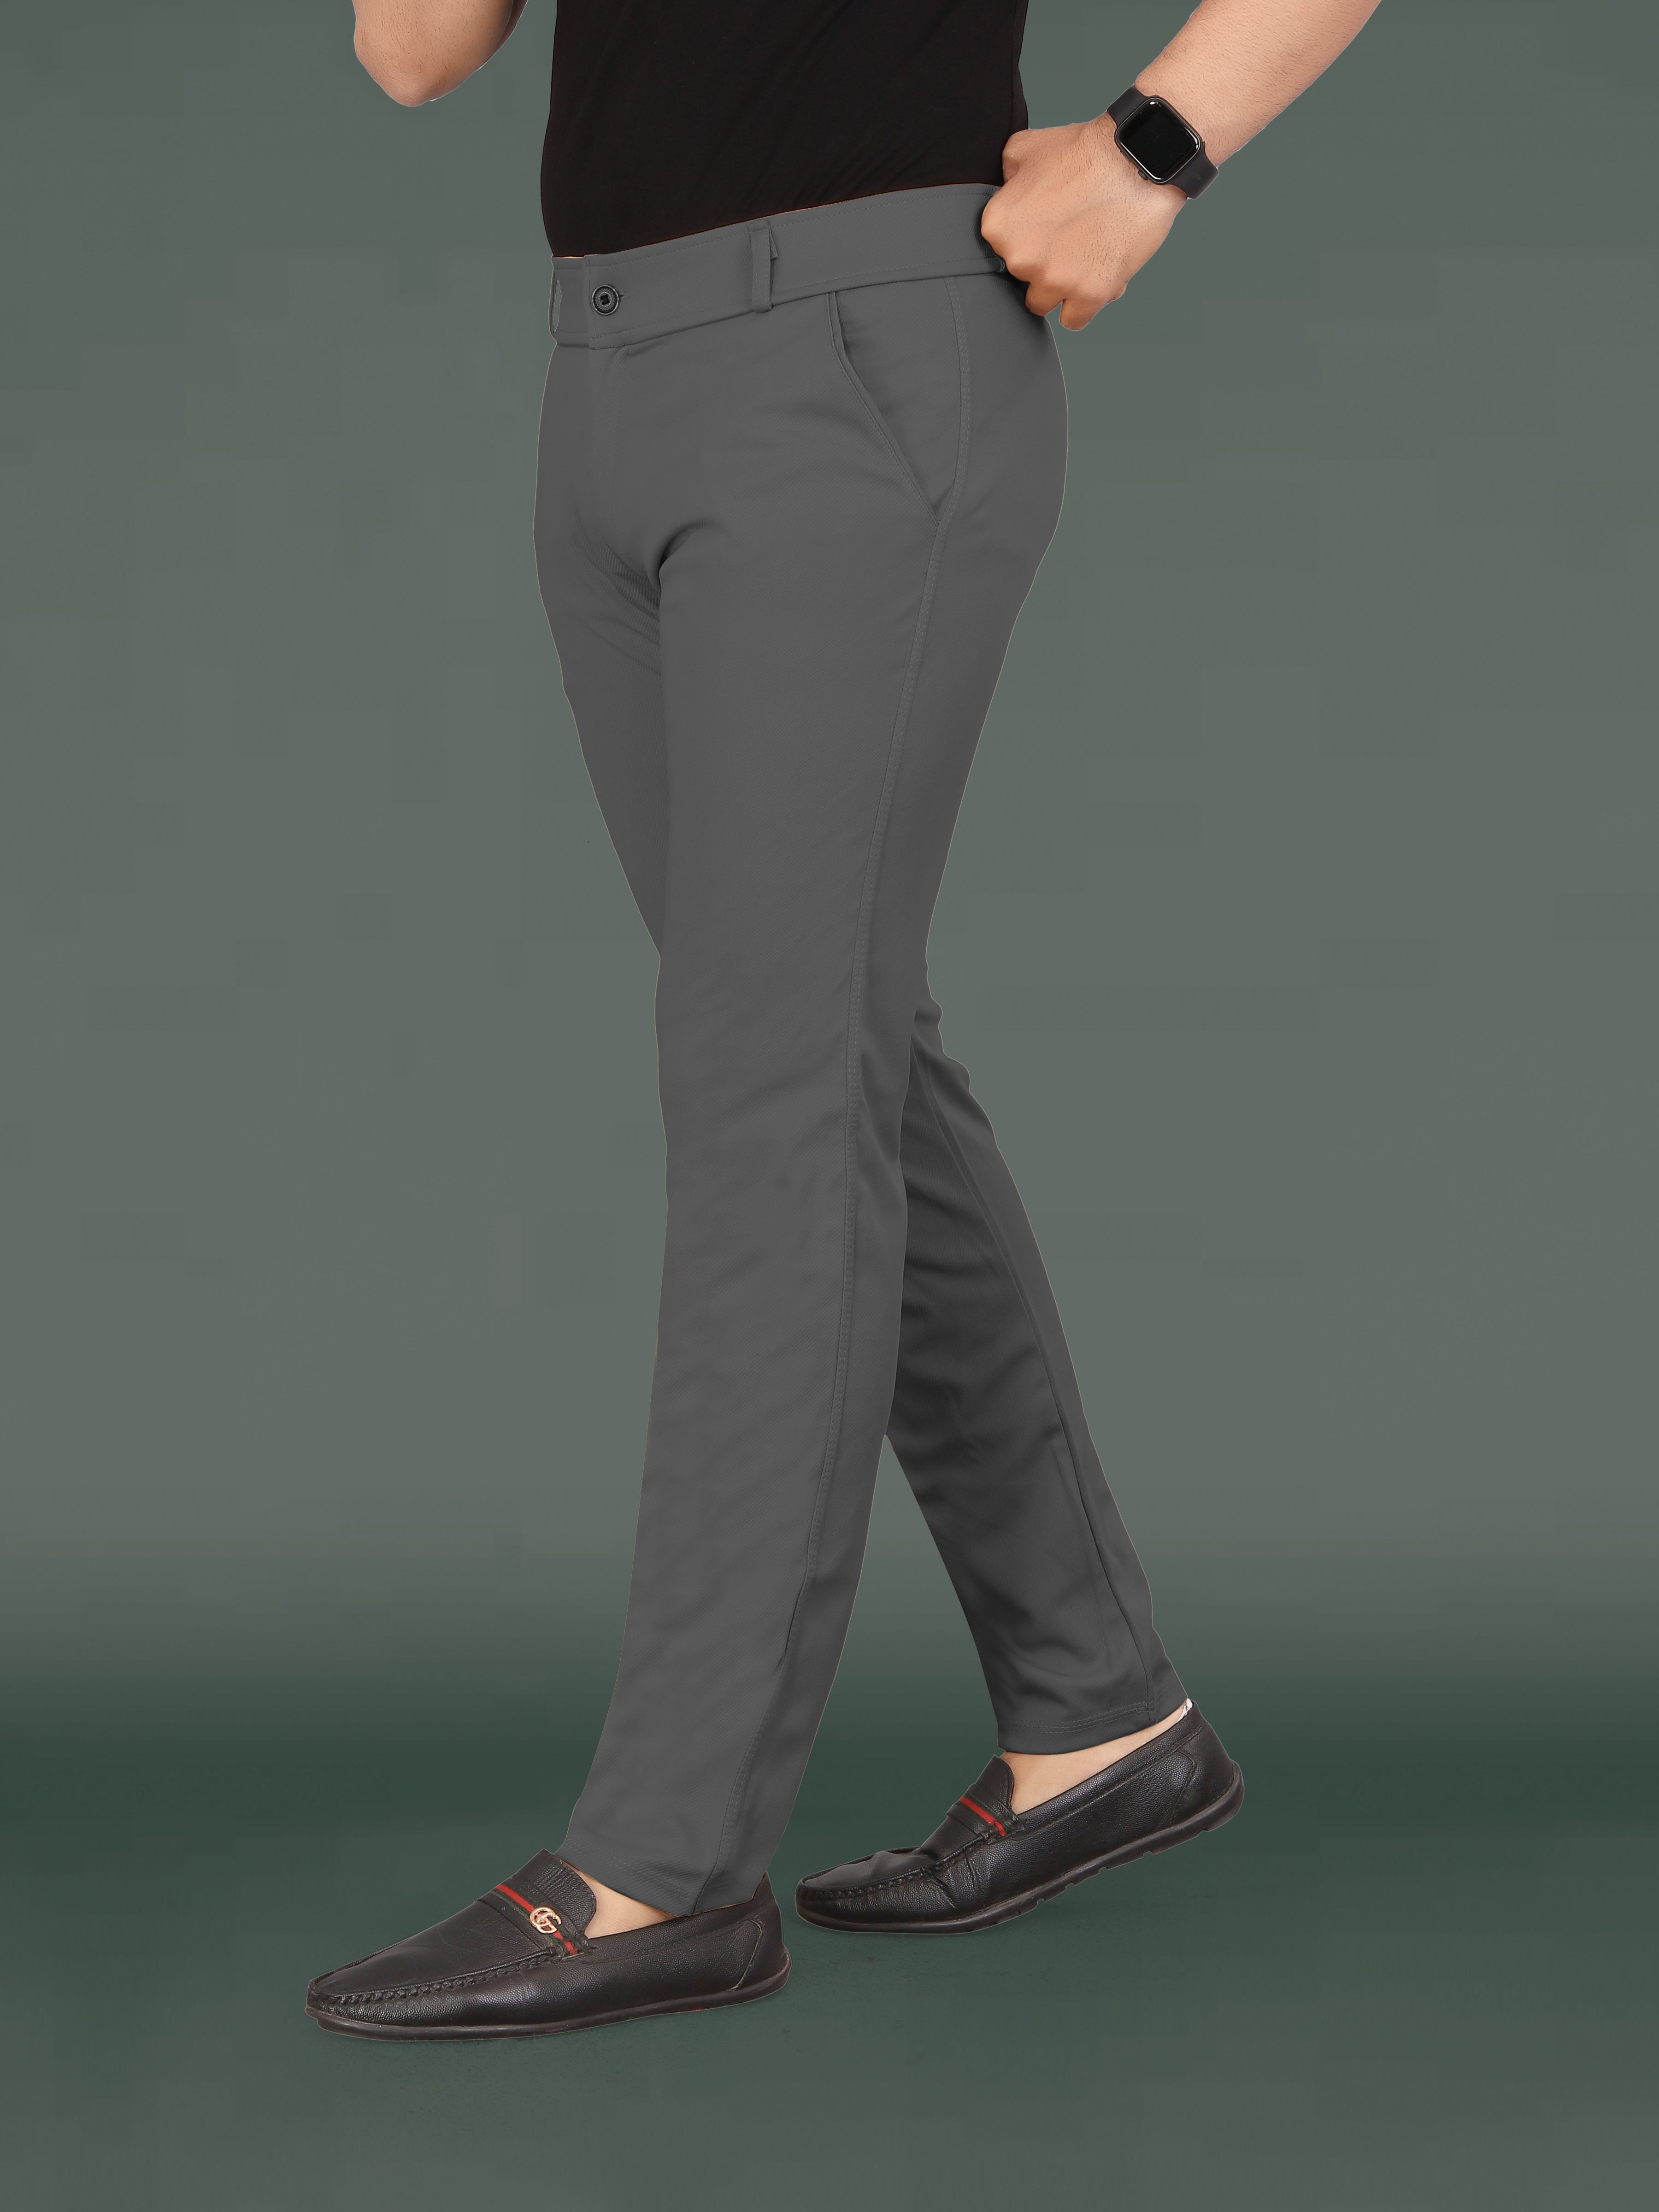 Ritsila Slim Fit Stretchable Lycra Trouser For Men { Pack Of 2 }